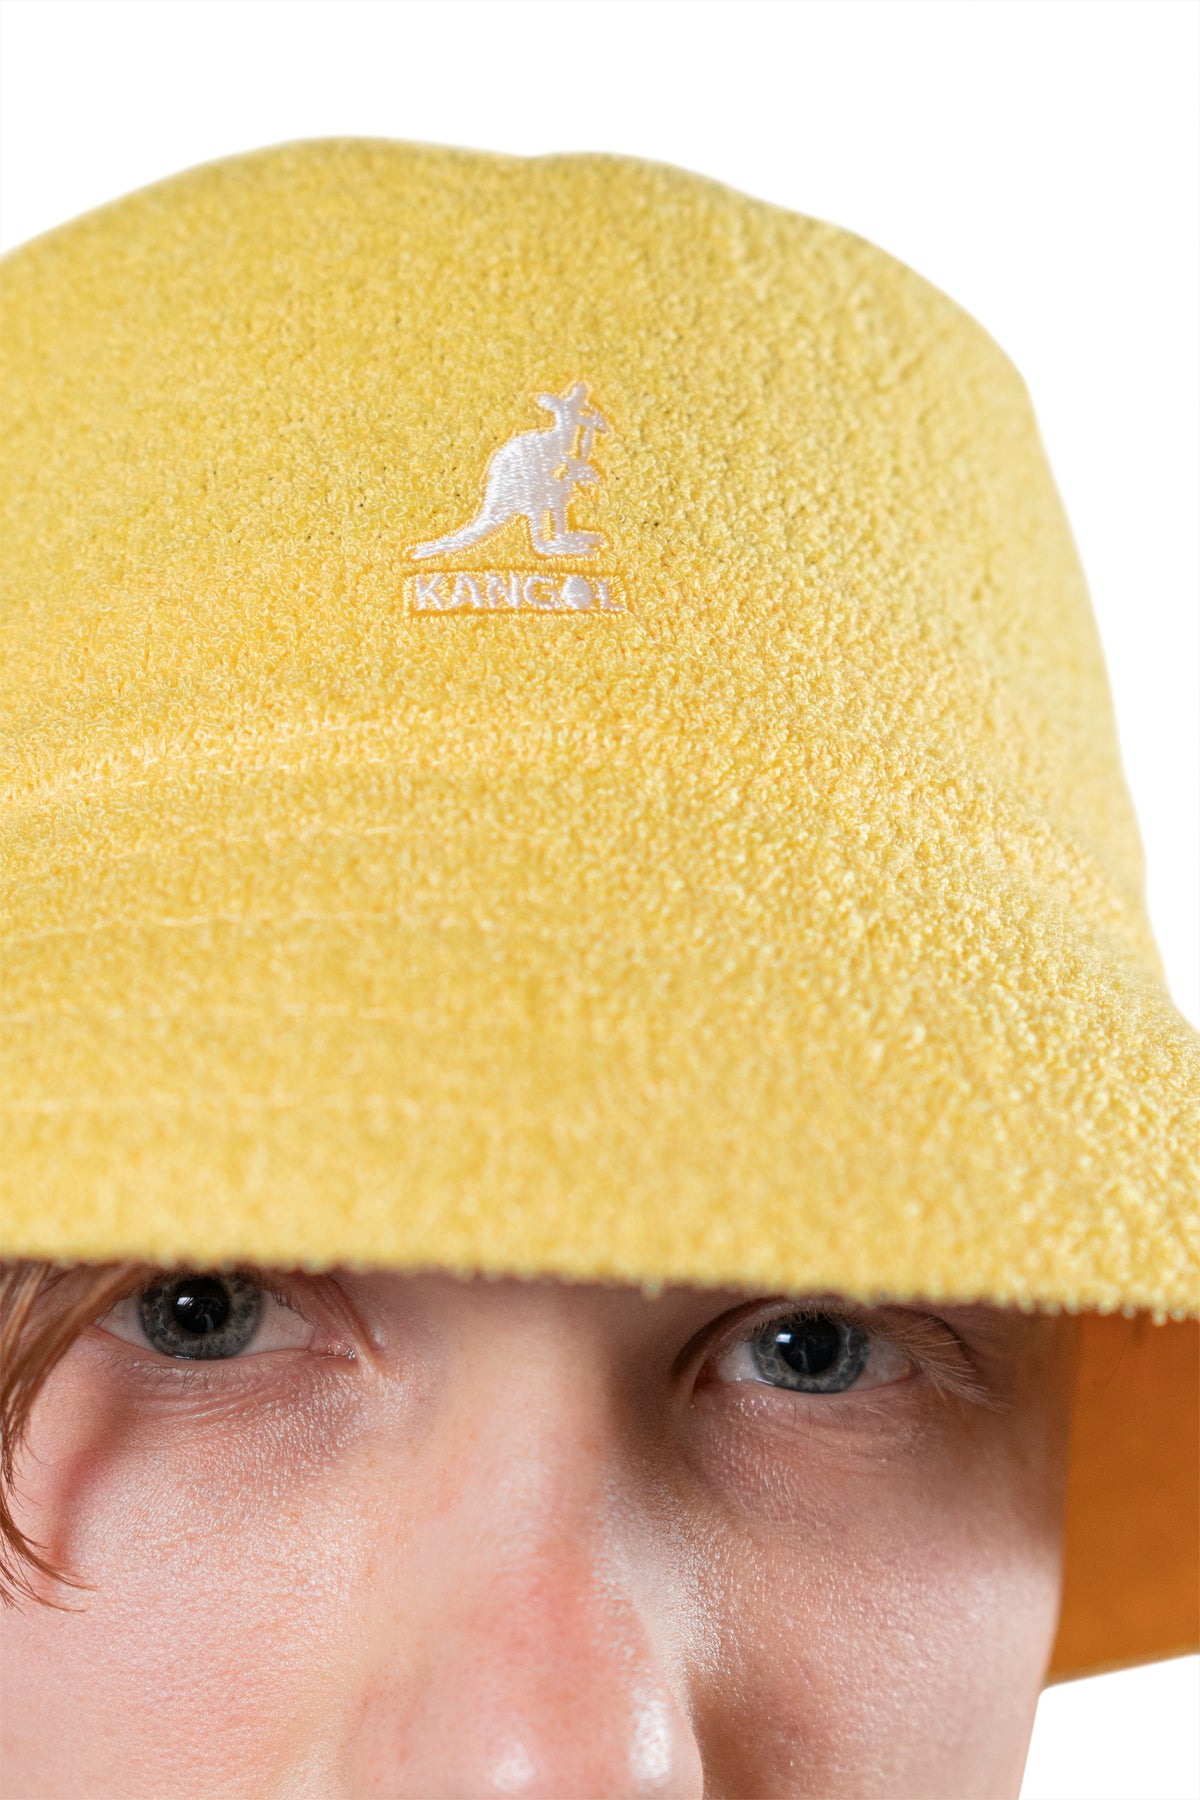 Kangol Bermuda Bucket Hat Yellow